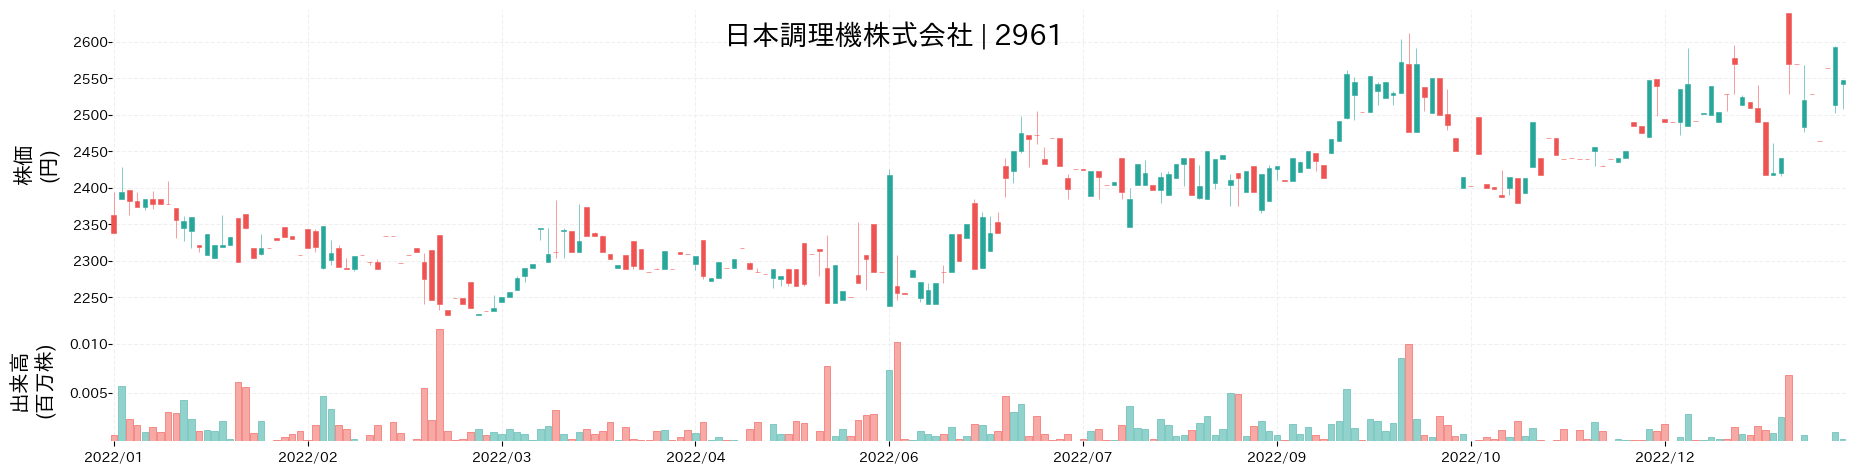 日本調理機の株価推移(2022)